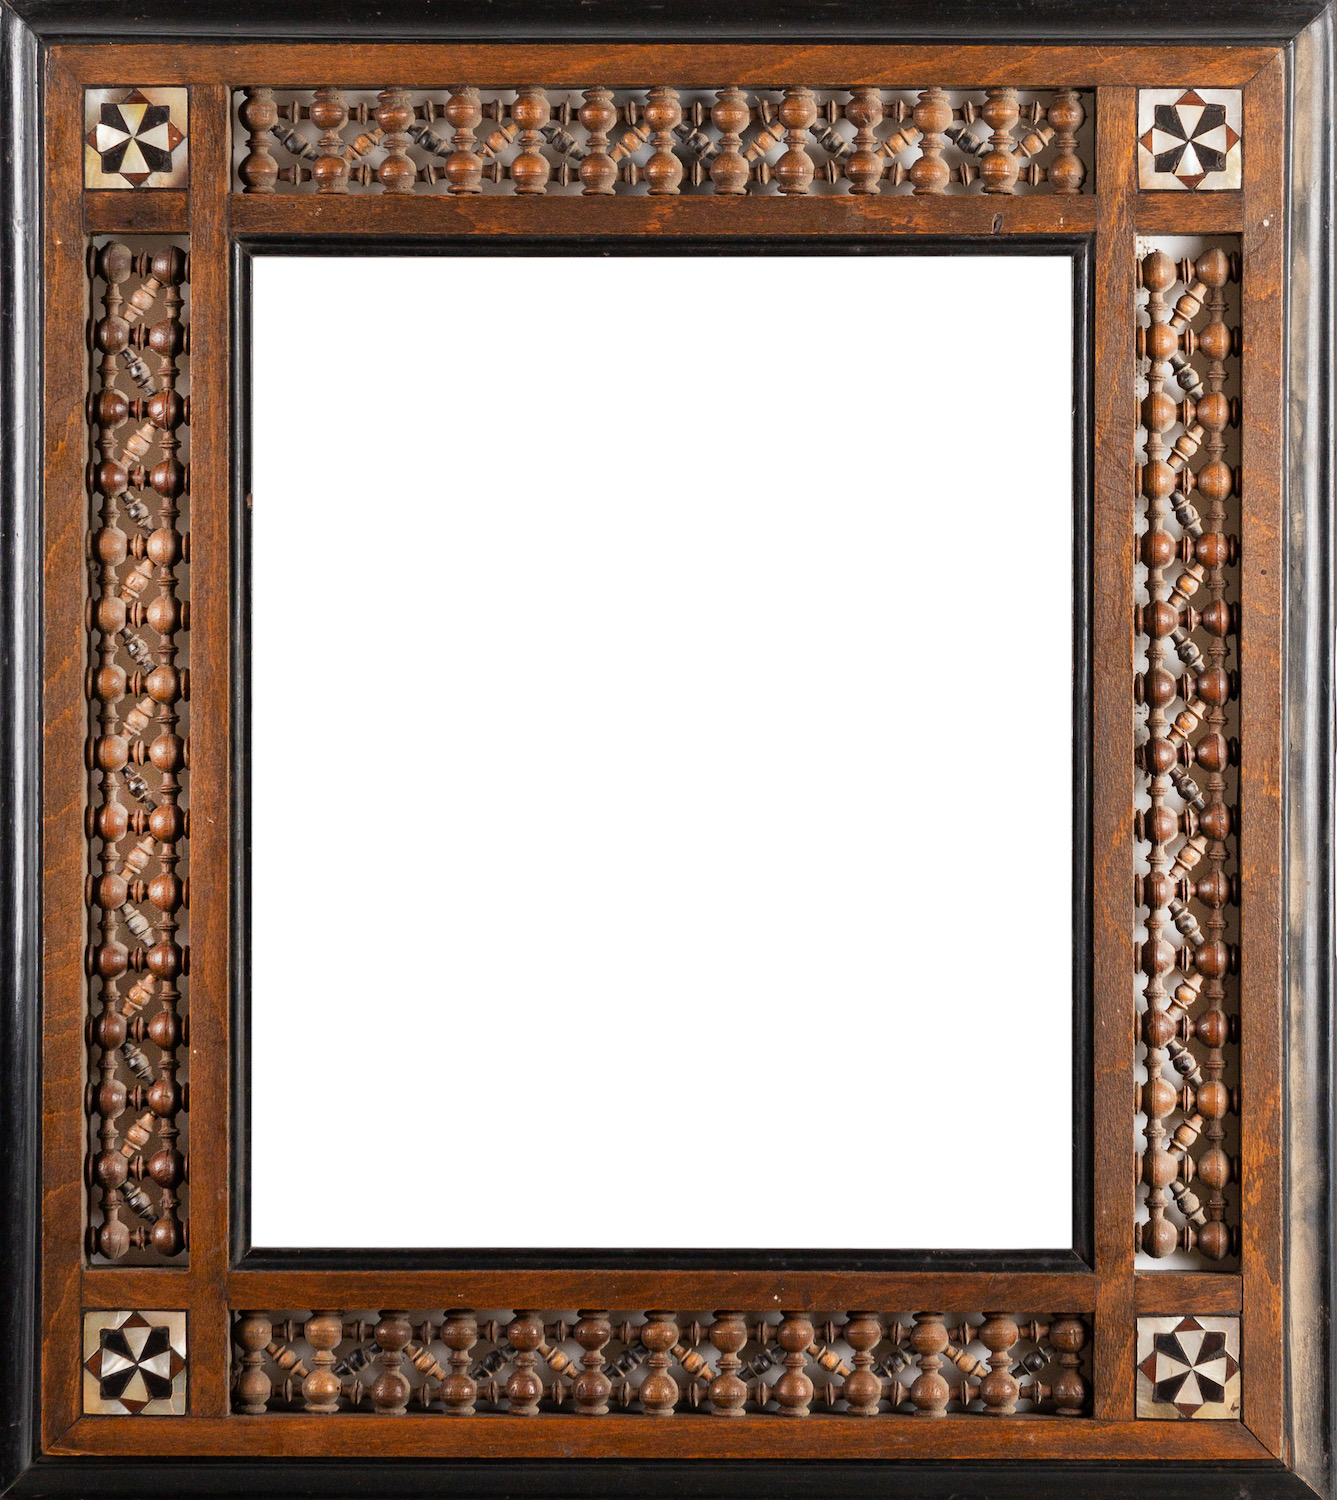 An Arts and Crafts Moorish frame with Mashrabiya turnings and bone inlay. 47 x 41cm, 27 x 20.